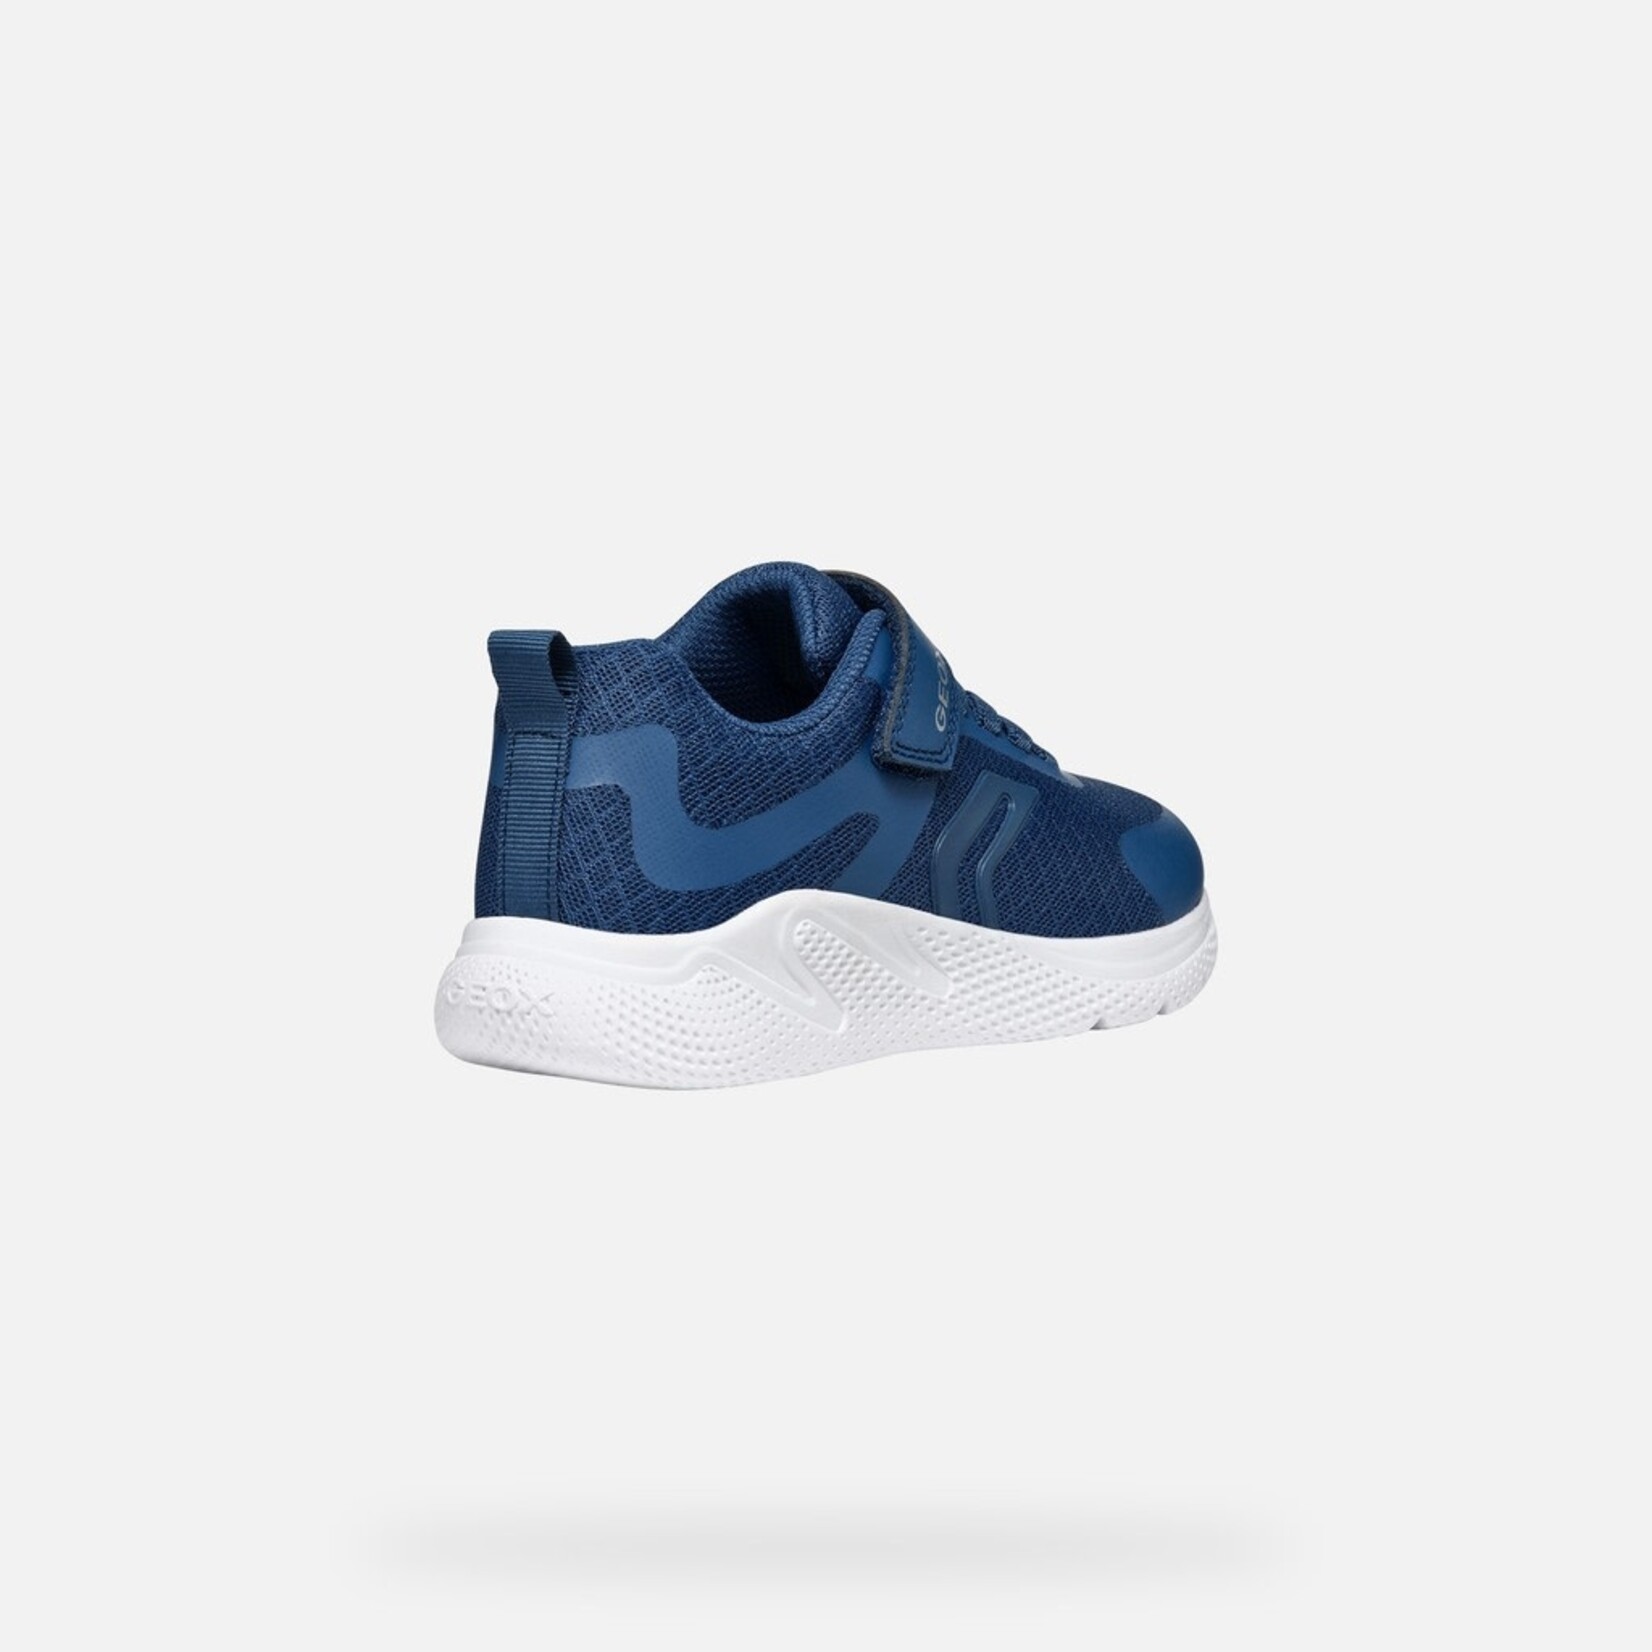 Geox GEOX - Chaussures de sport couleur denim 'Sprintye - Bleu'